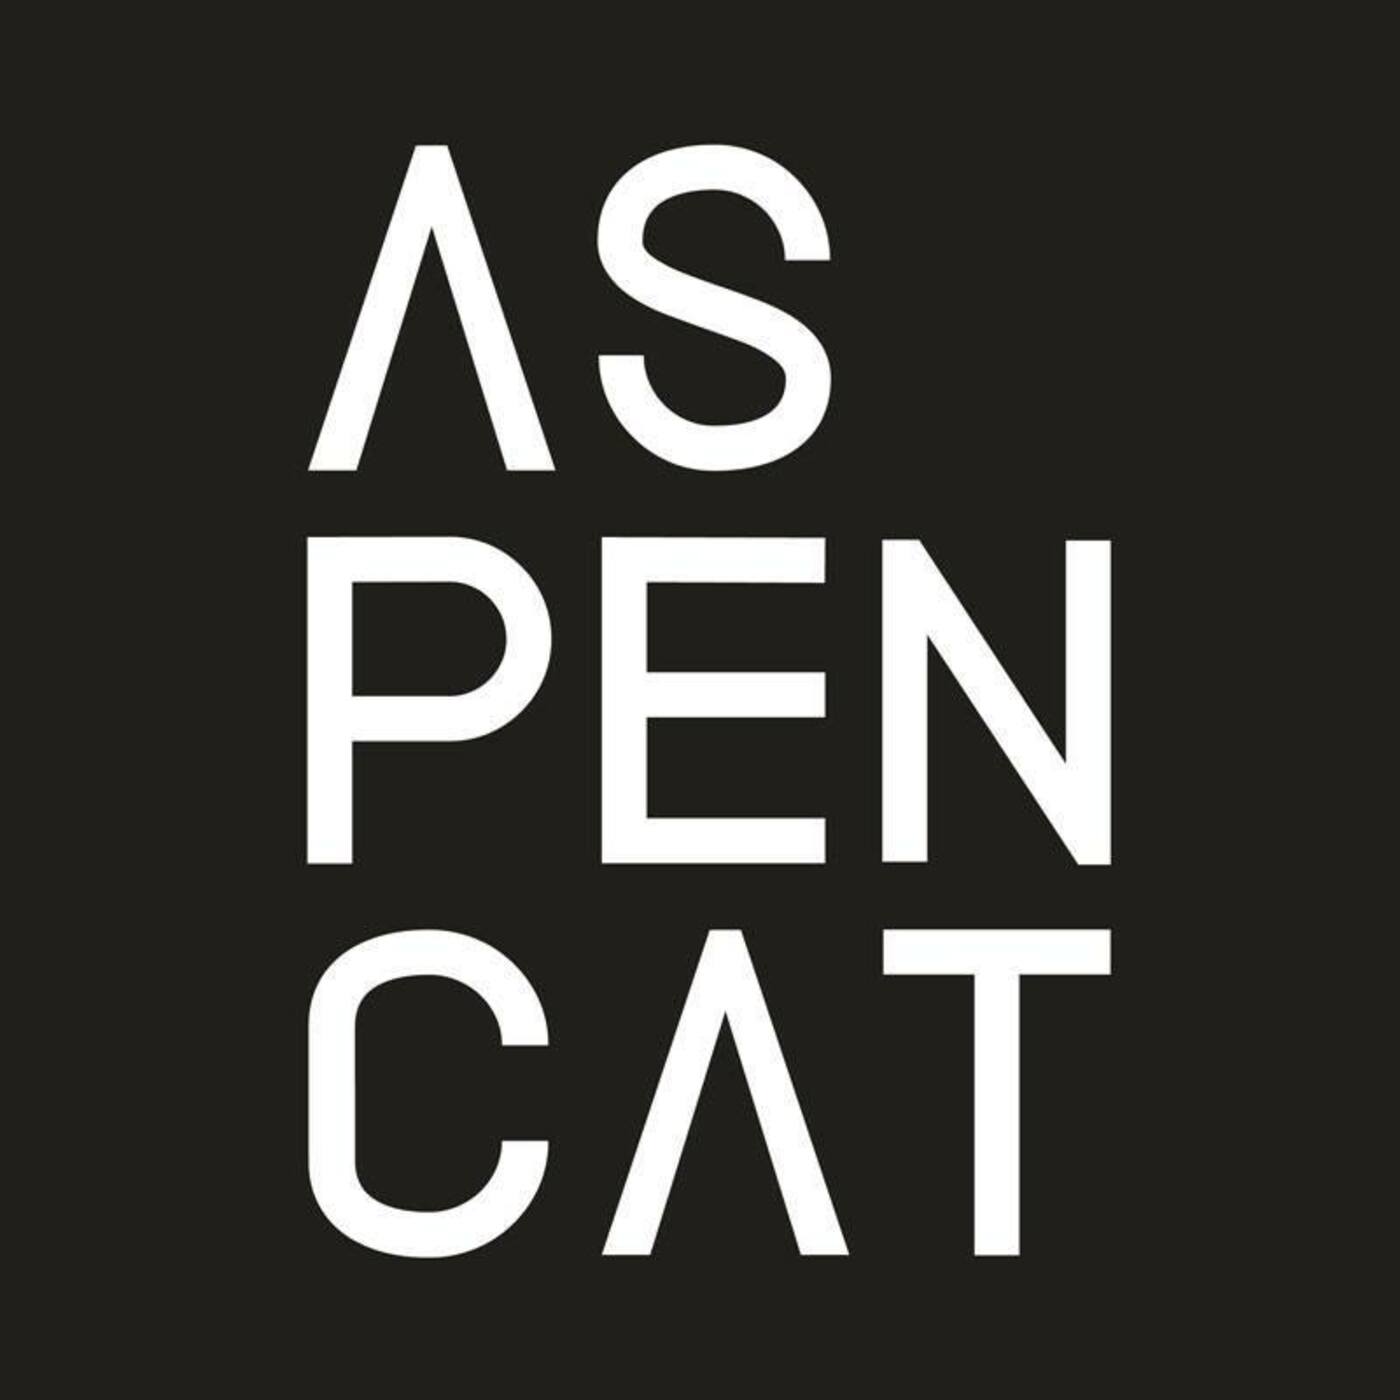 Aspencat | musica en valencià